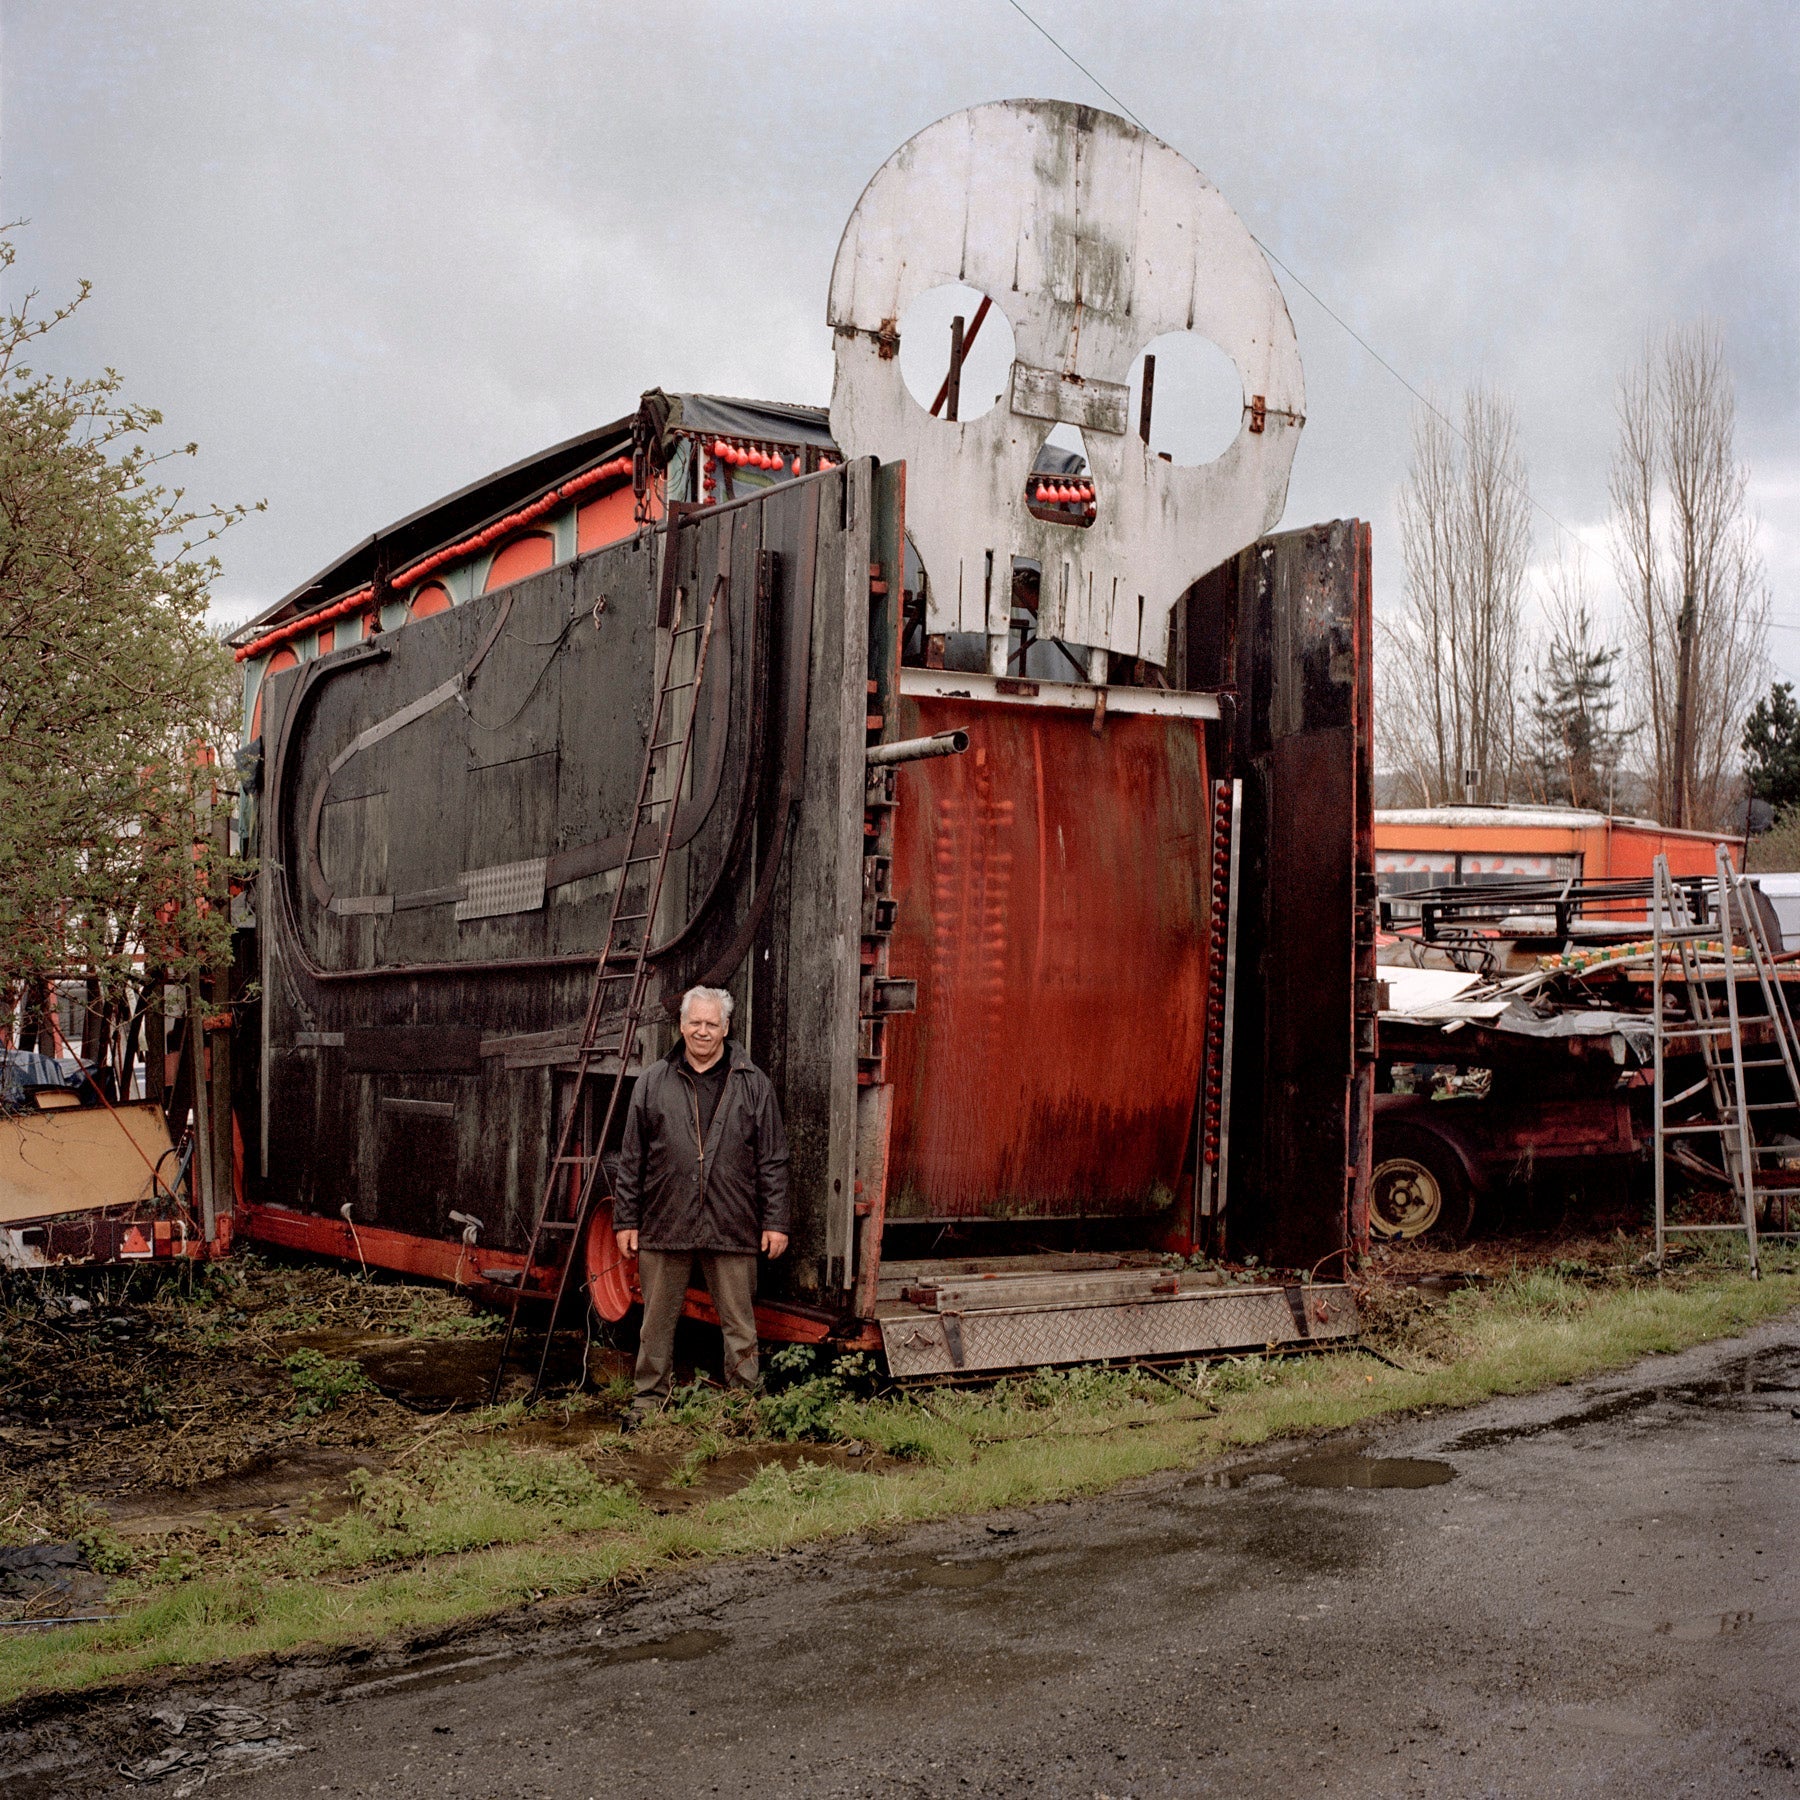 Francis Gavan, Ghost Train Ride, Pottery Fields, Leeds, Spring 2006 - 7x9" Print